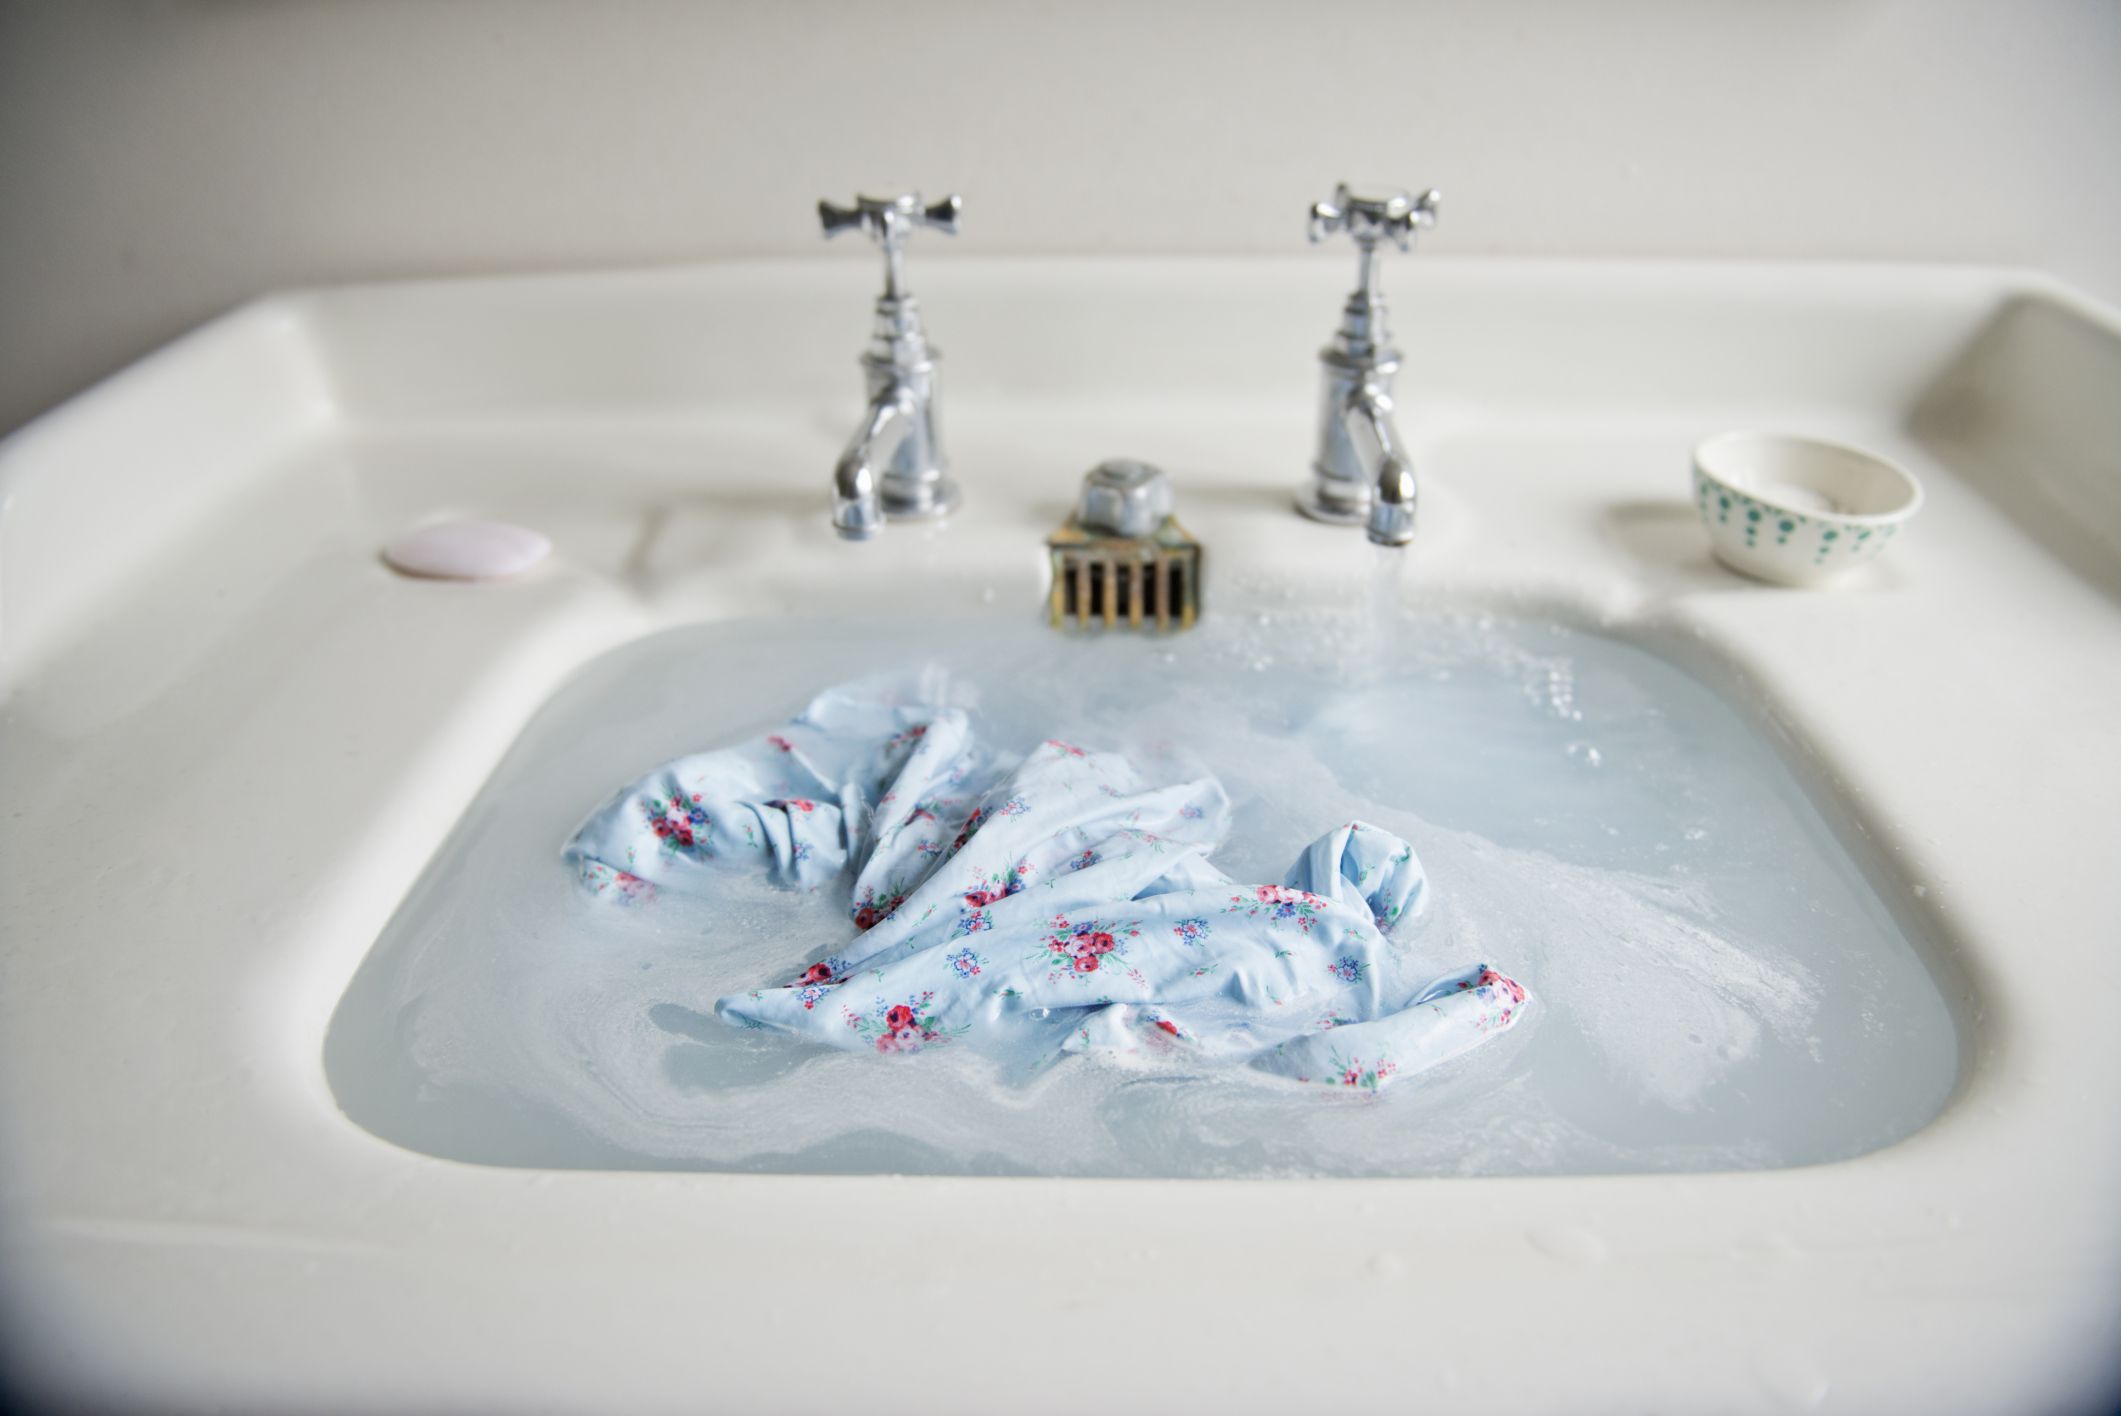 Hand Washing Clothing Tips How To, Washing Laundry In Bathtub